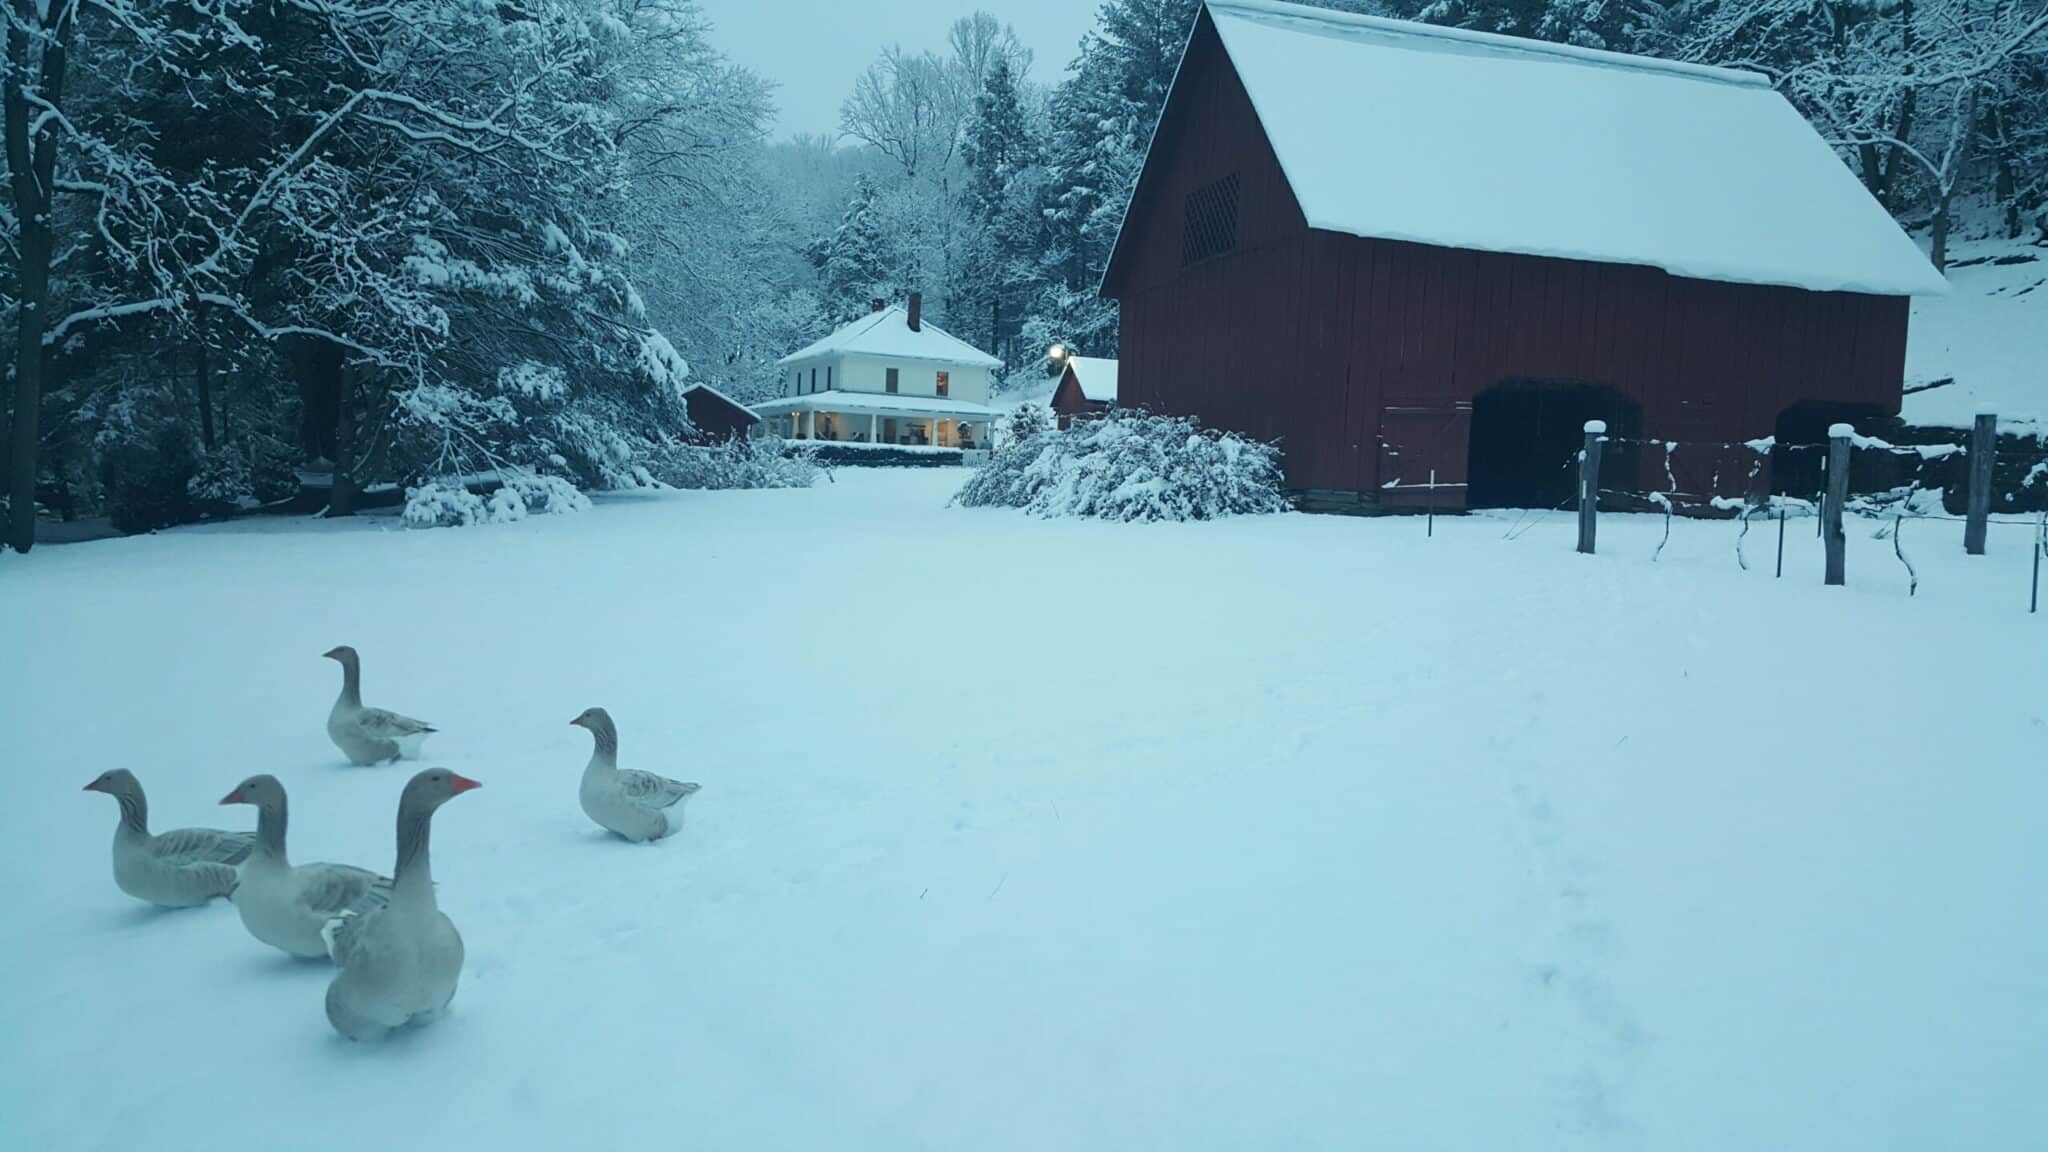 The Bark House: McCurry Farm in Winter